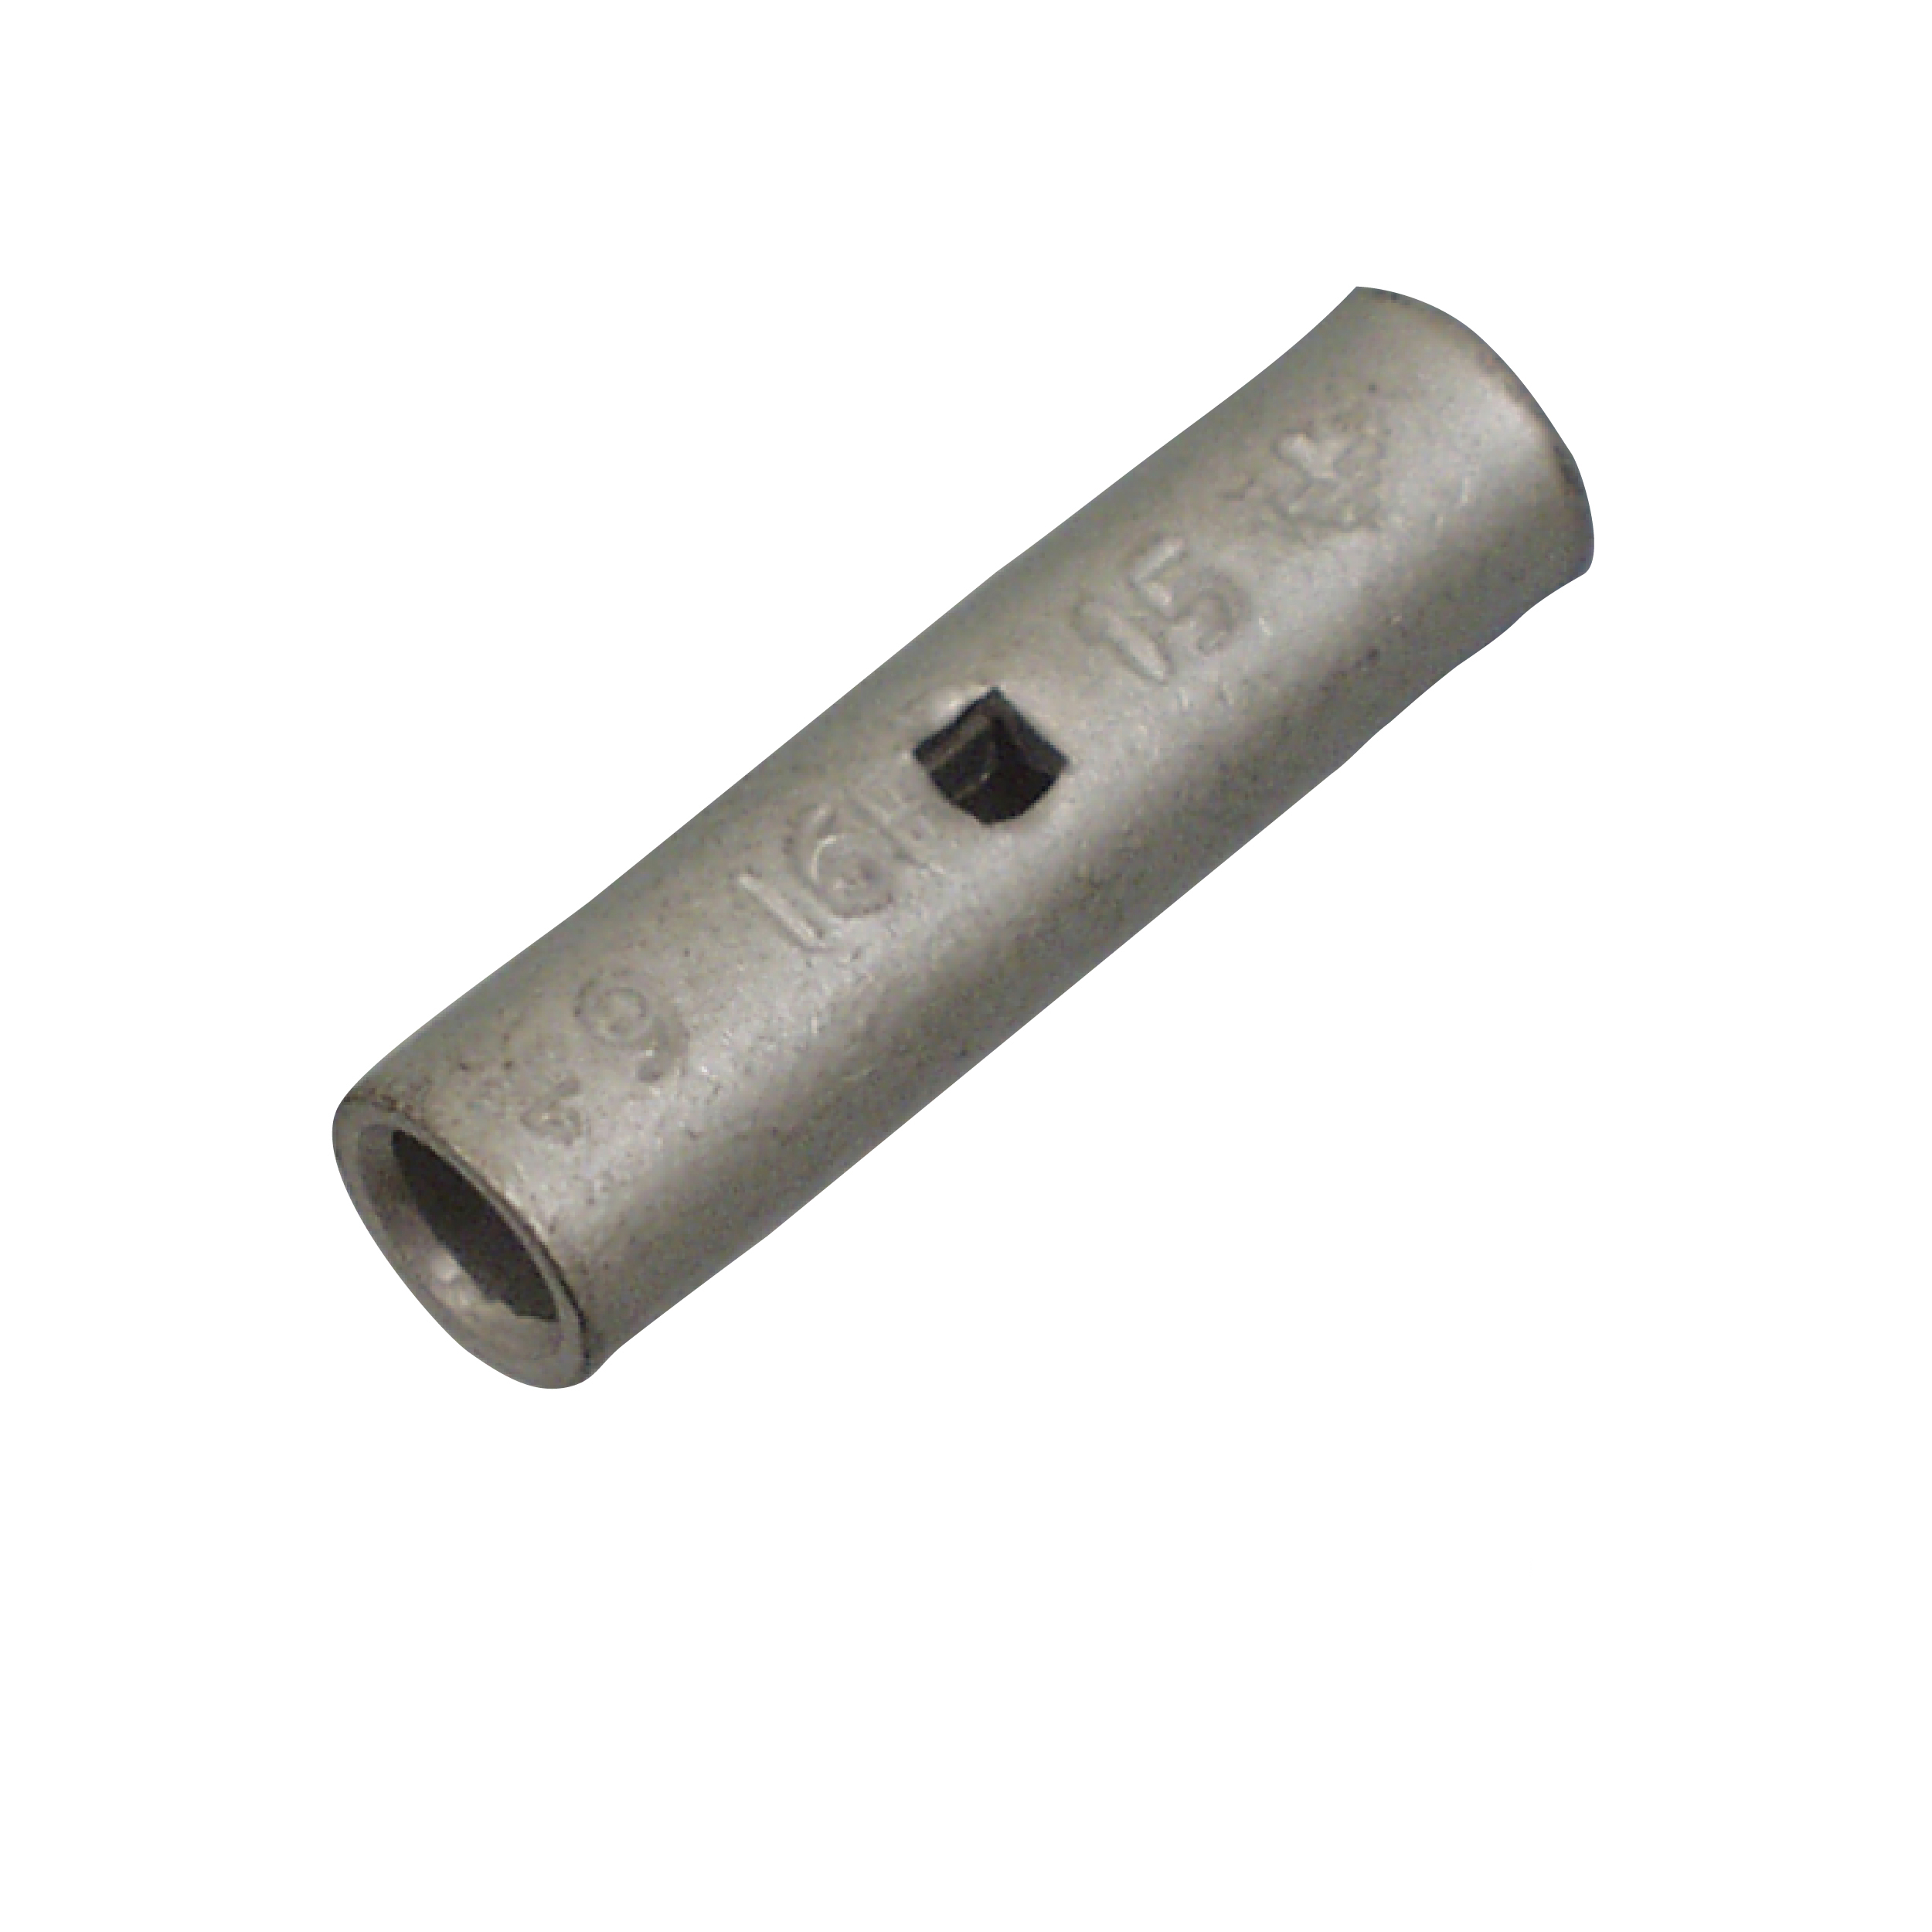 Elpress KSD Copper Through Connectors - Splices (Range 16-800mm²) - KSD35, KSD50, KSD120, KSD185